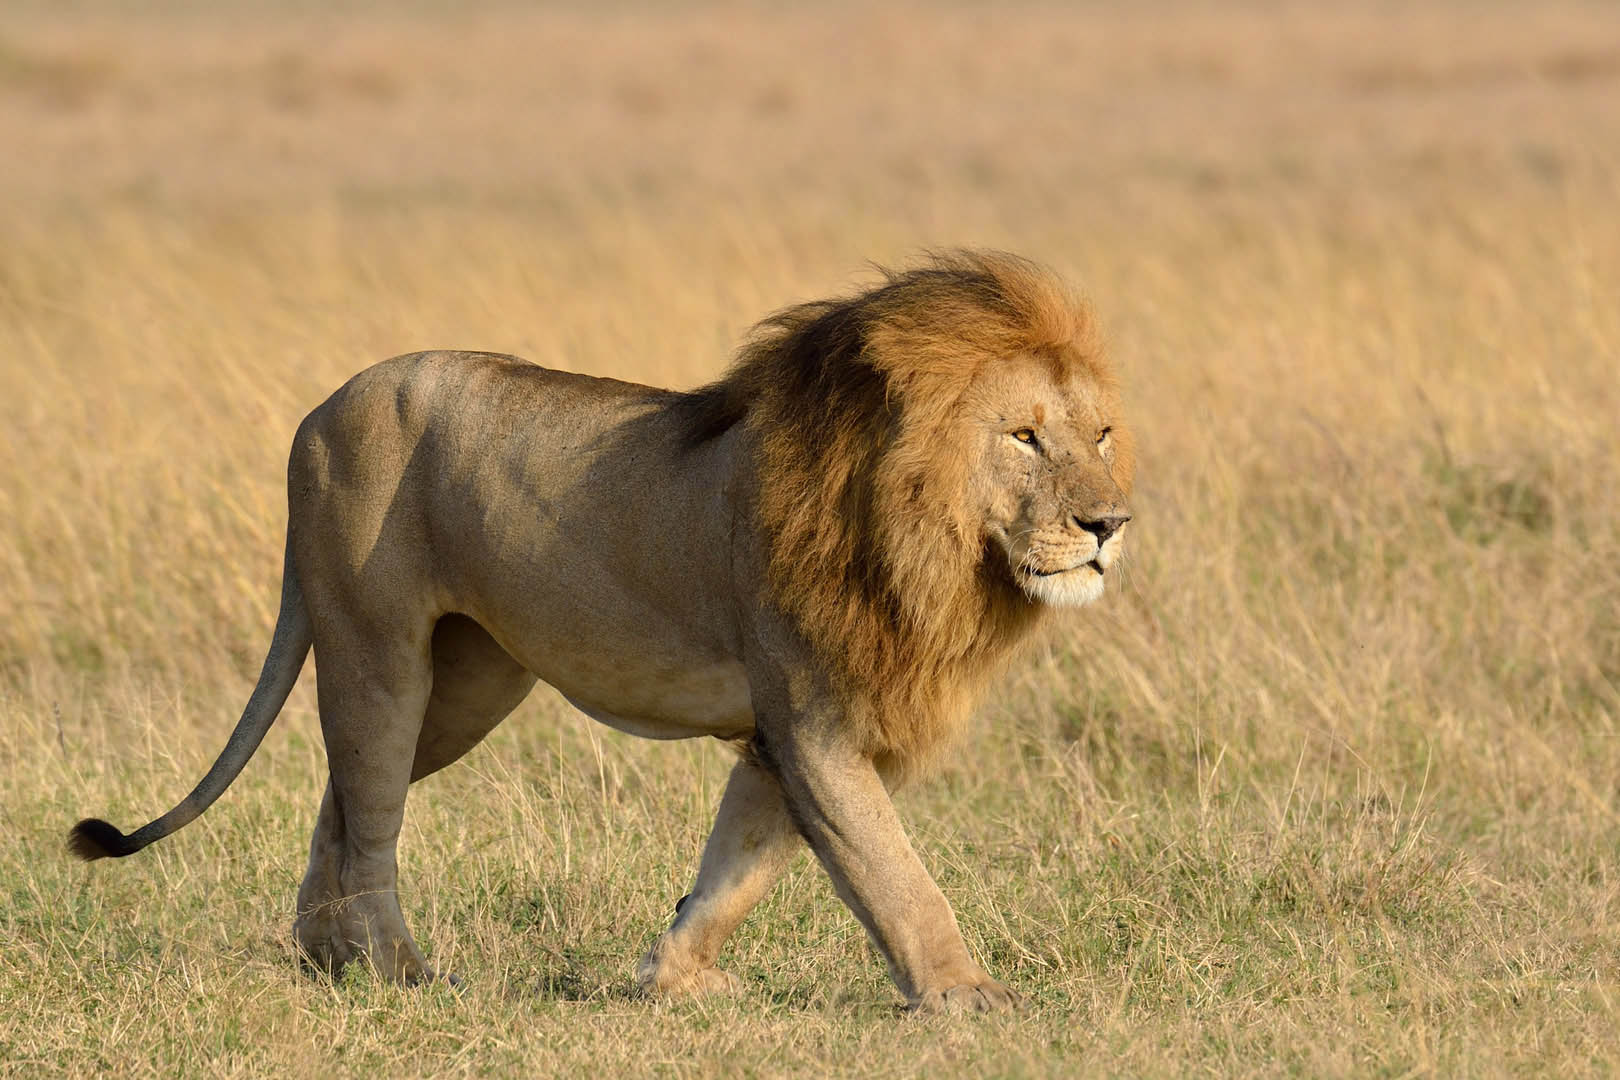 maasai-mara-national-reserve-destinations-kenya-maasai-wanderings-africa-lion